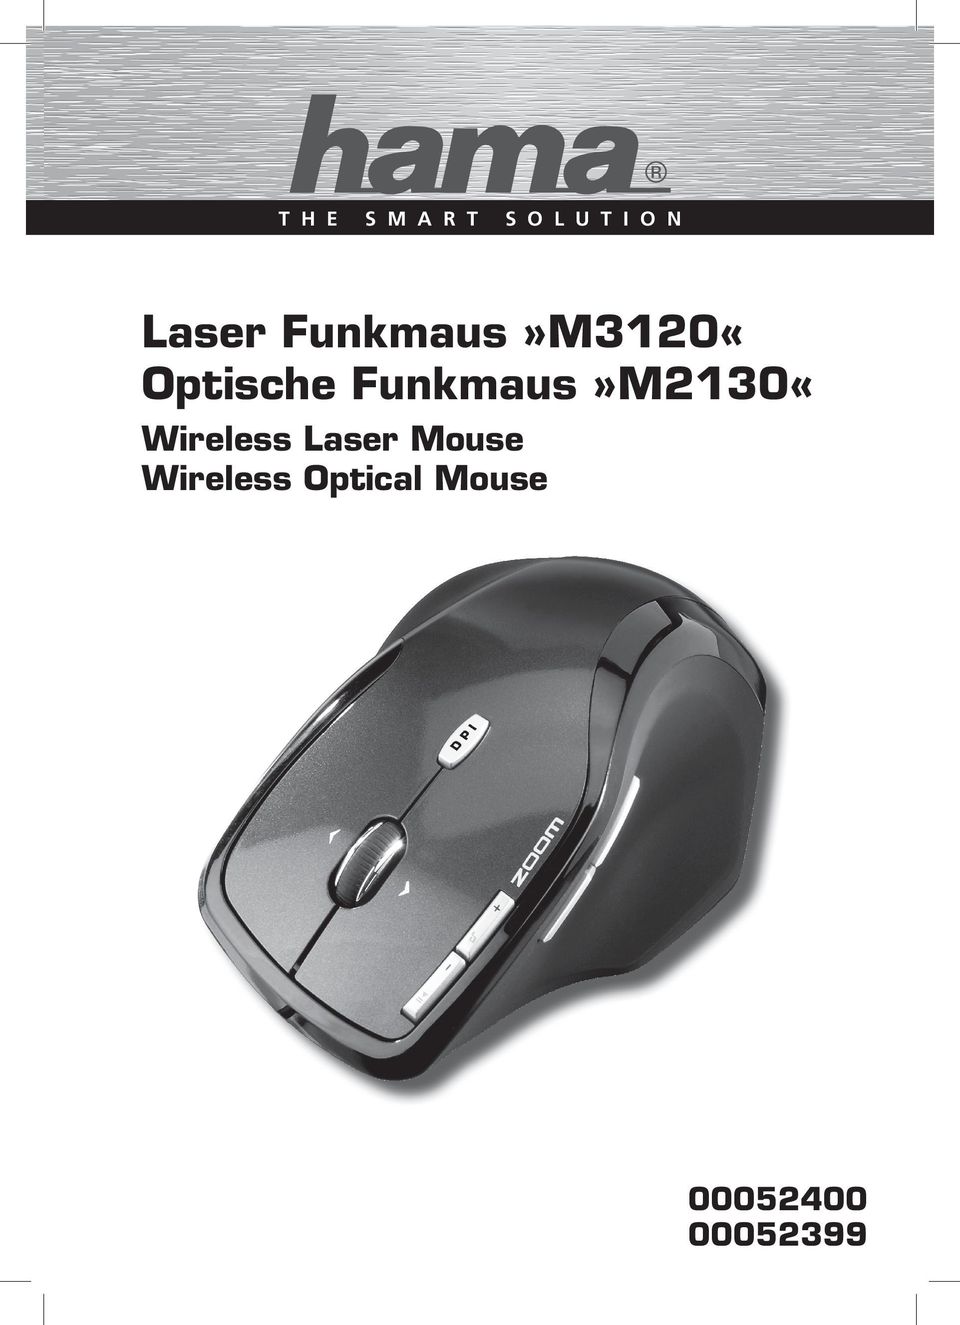 Funkmaus»M2130«Wireless Laser